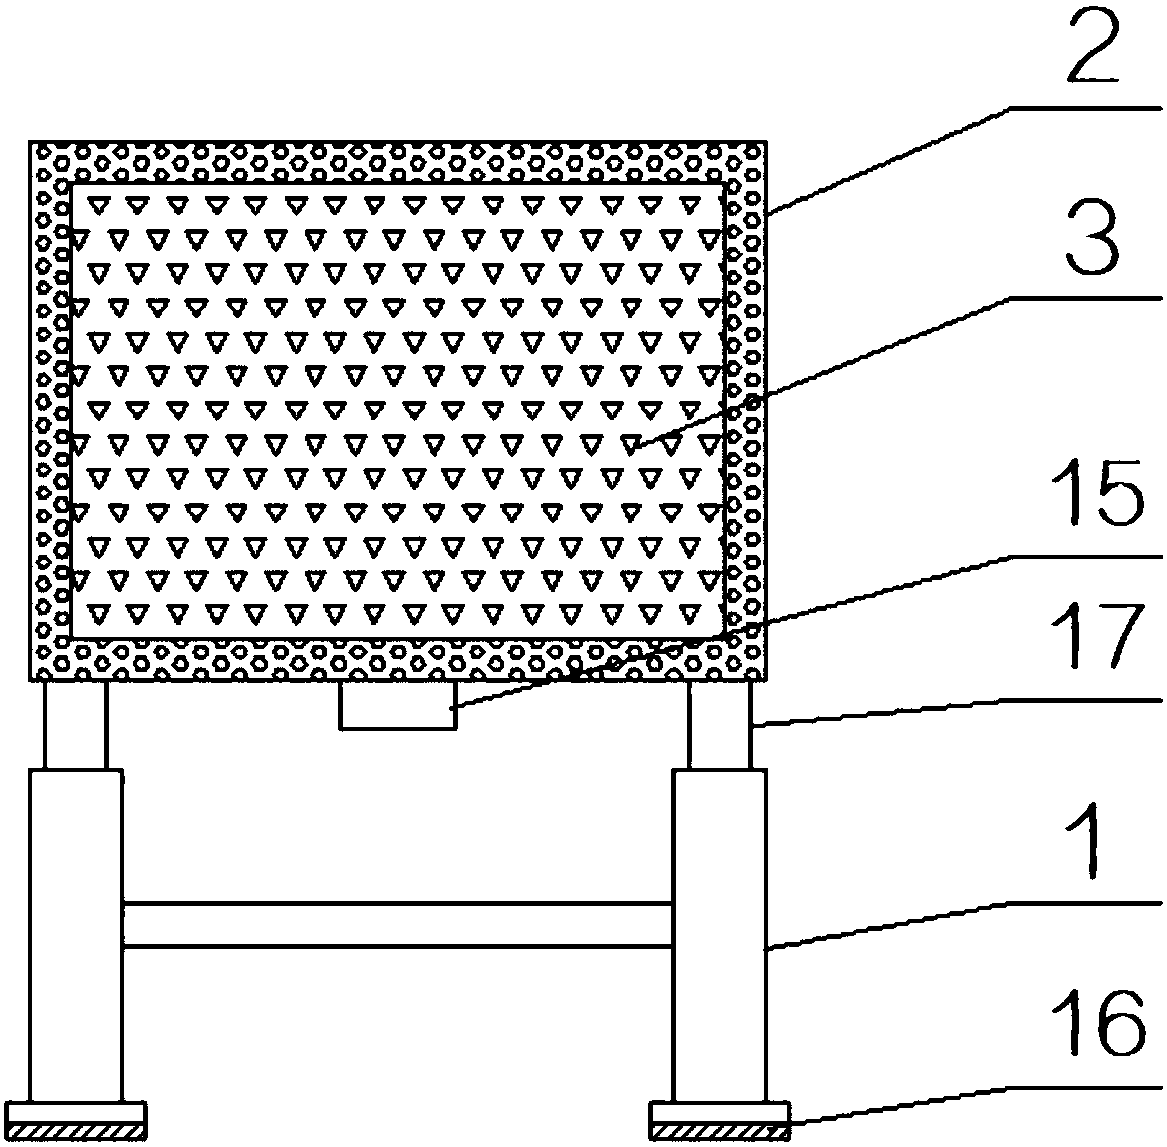 Multilayer rapid temperature rising type electric heater containing graphene and aluminum alloy